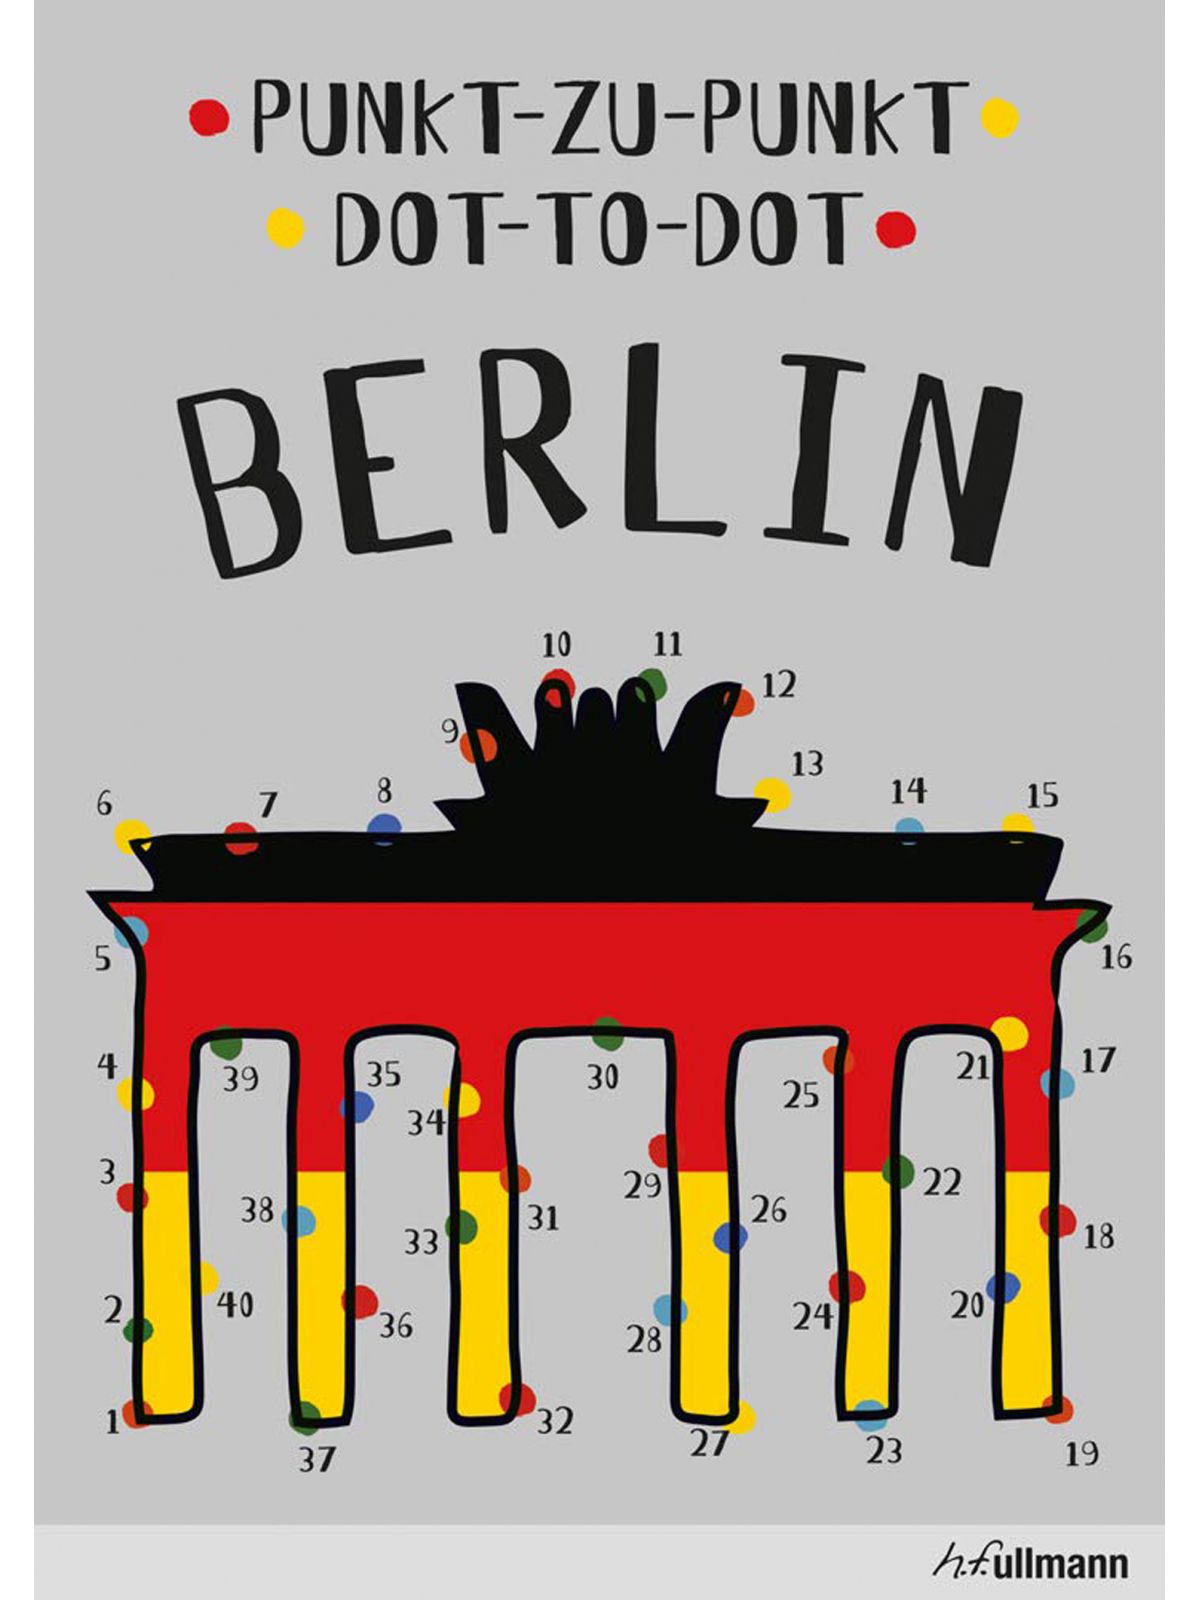 DOT-TO-DOT BERLIN  Купить Книгу на Английском